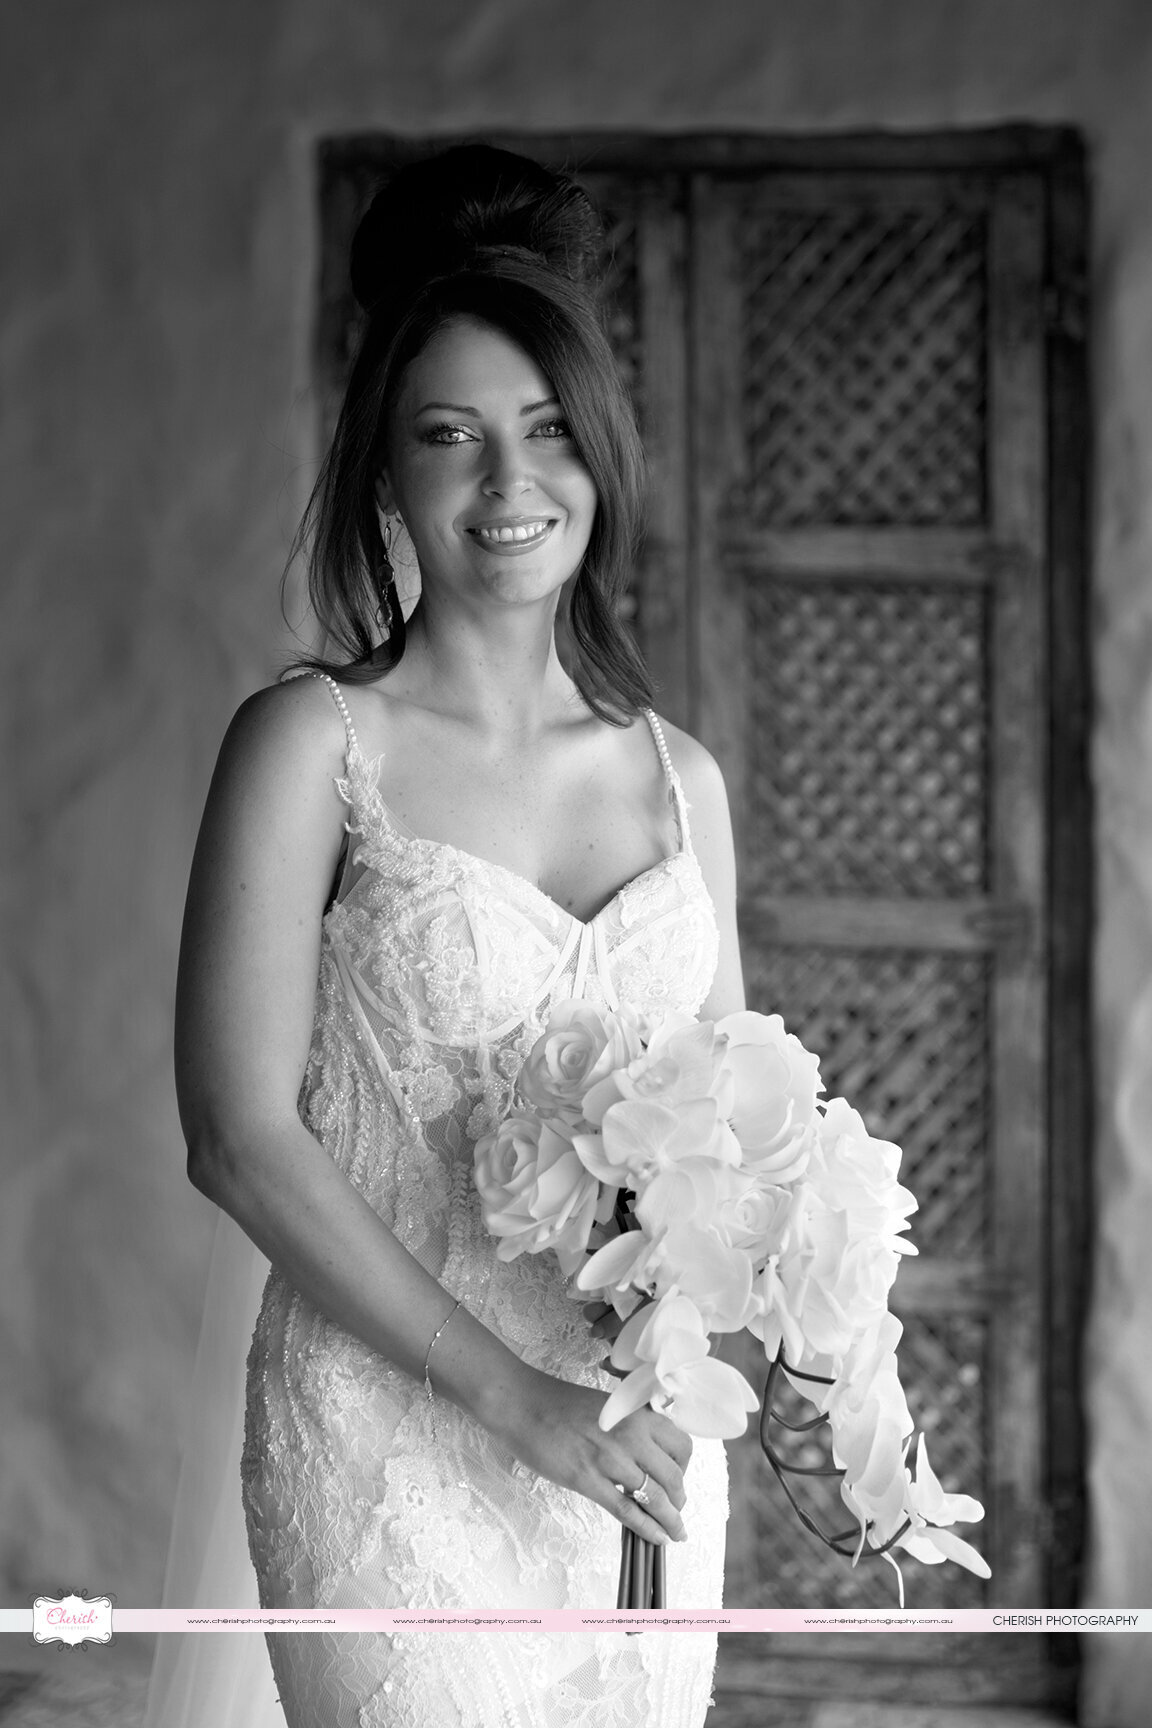 Elegant black and white bride portraits at Villa Botanica amidst blooming flowers.